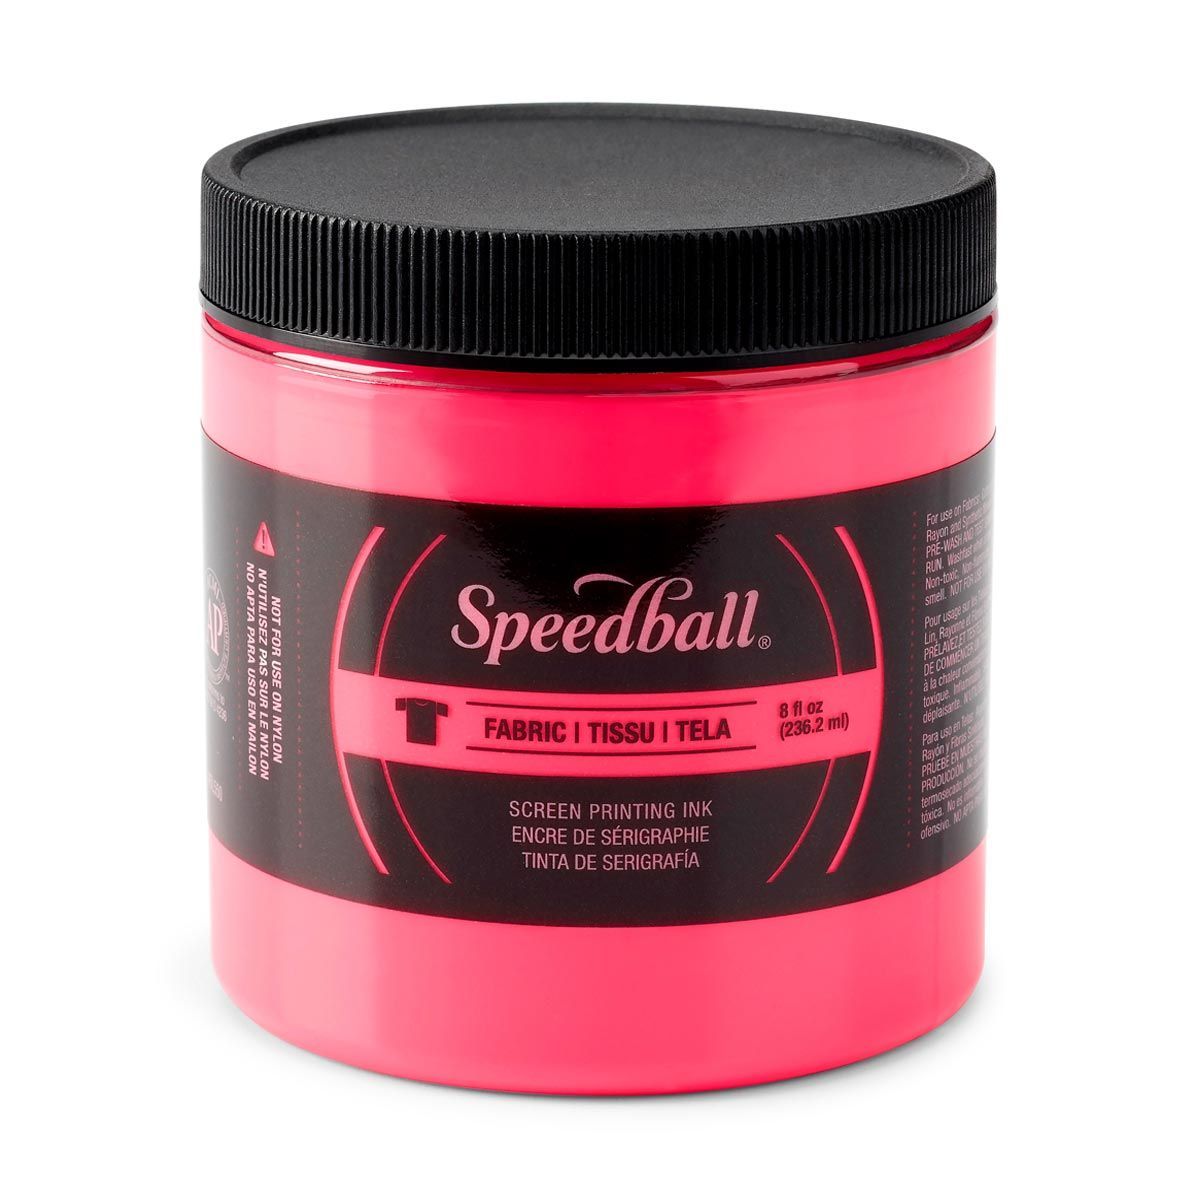 Speedball Fluorescent Screen Printing Fabric Ink - Hot Pink 8oz